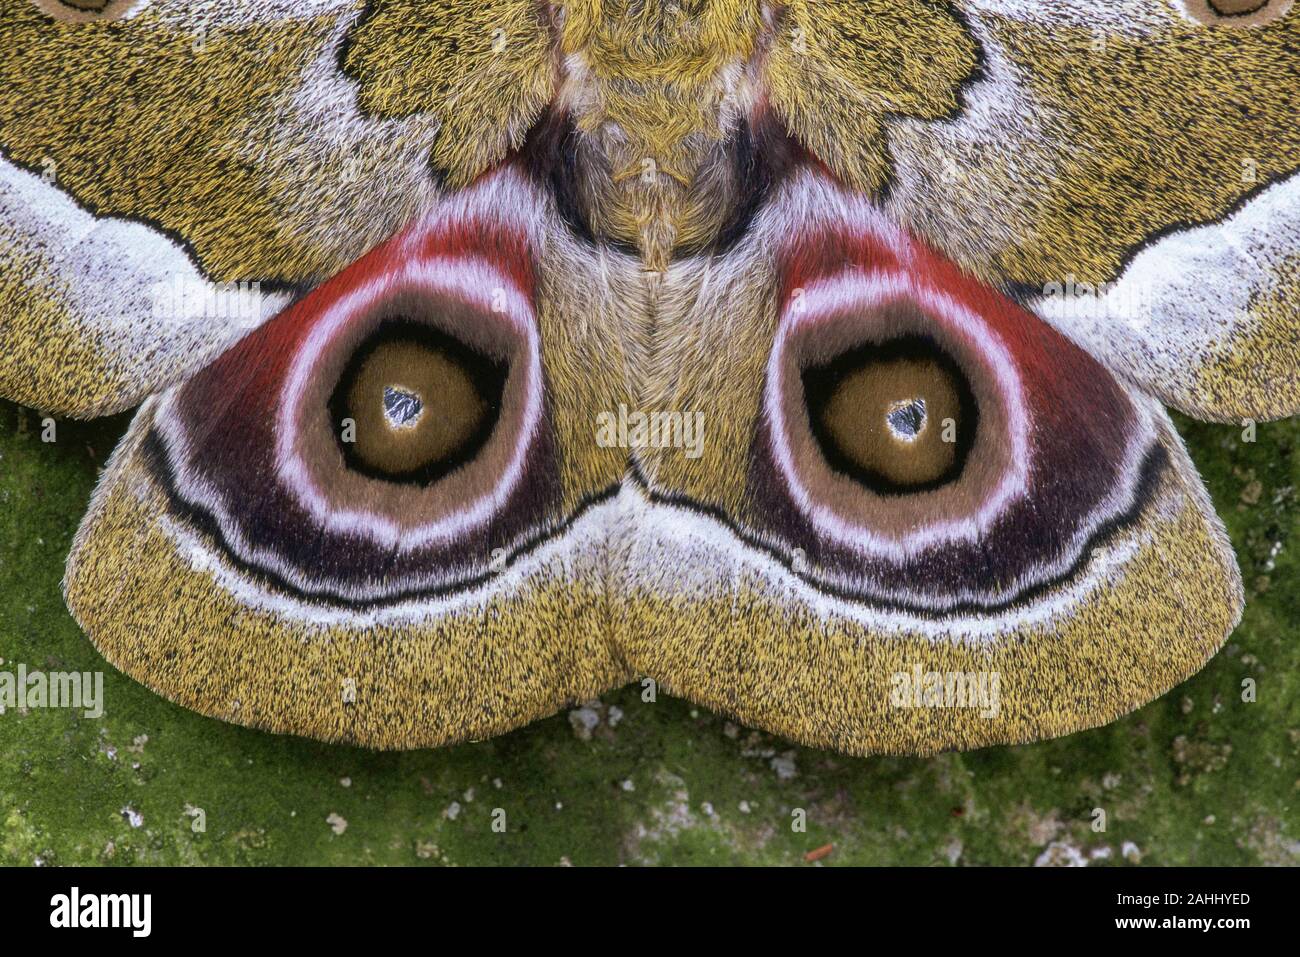 African Emperor Moth (Gonimbrasia zambesina) In full startle display showing false eysepots. Stock Photo